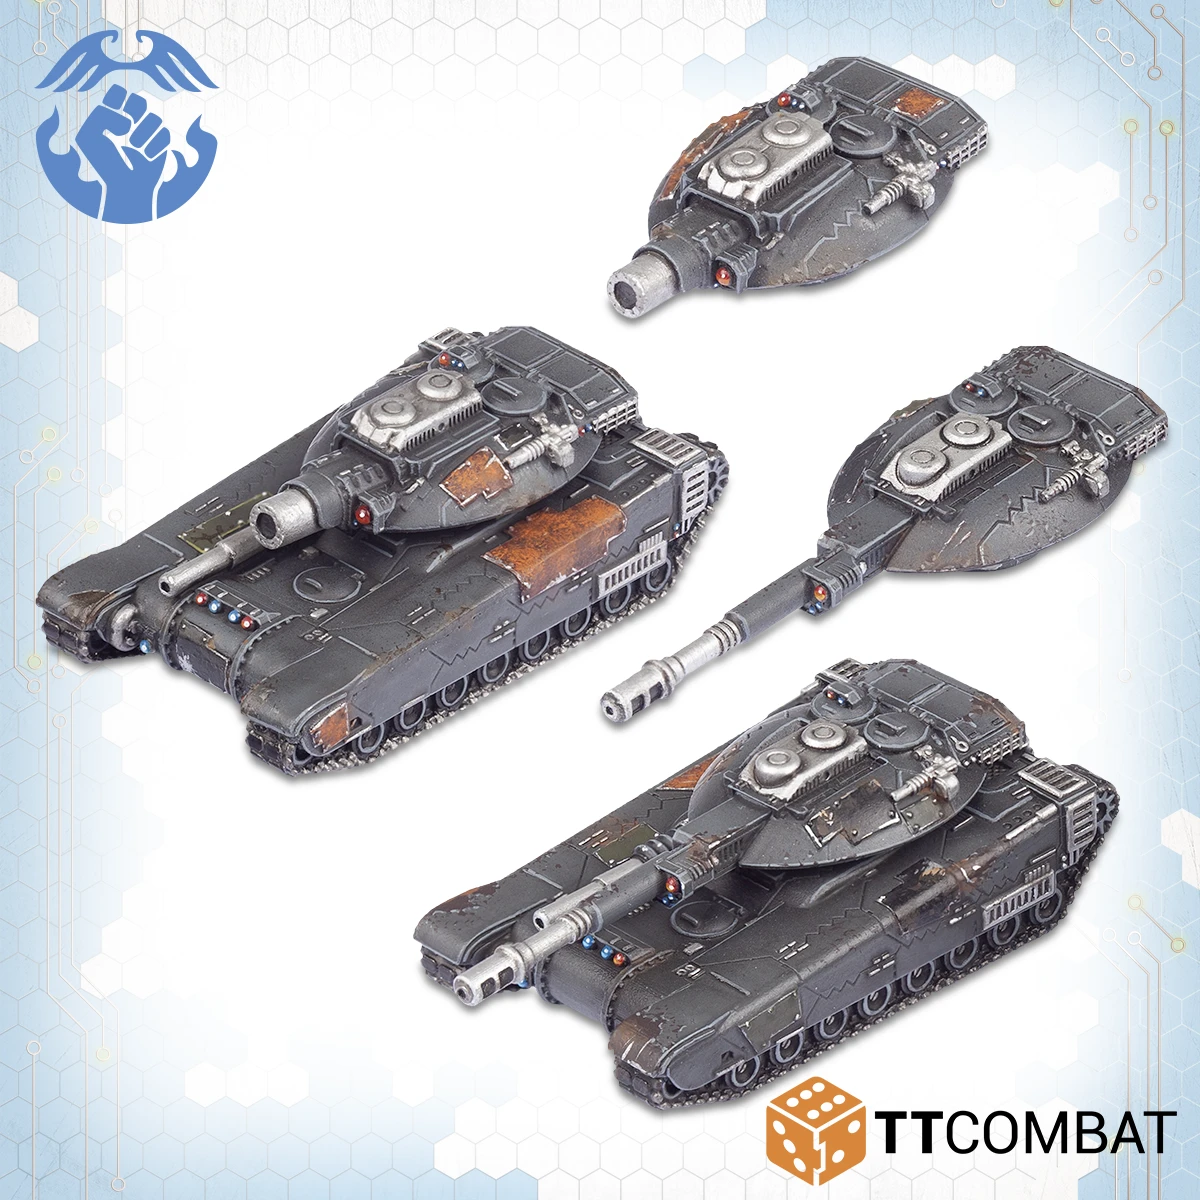 Models of hannibal tanks